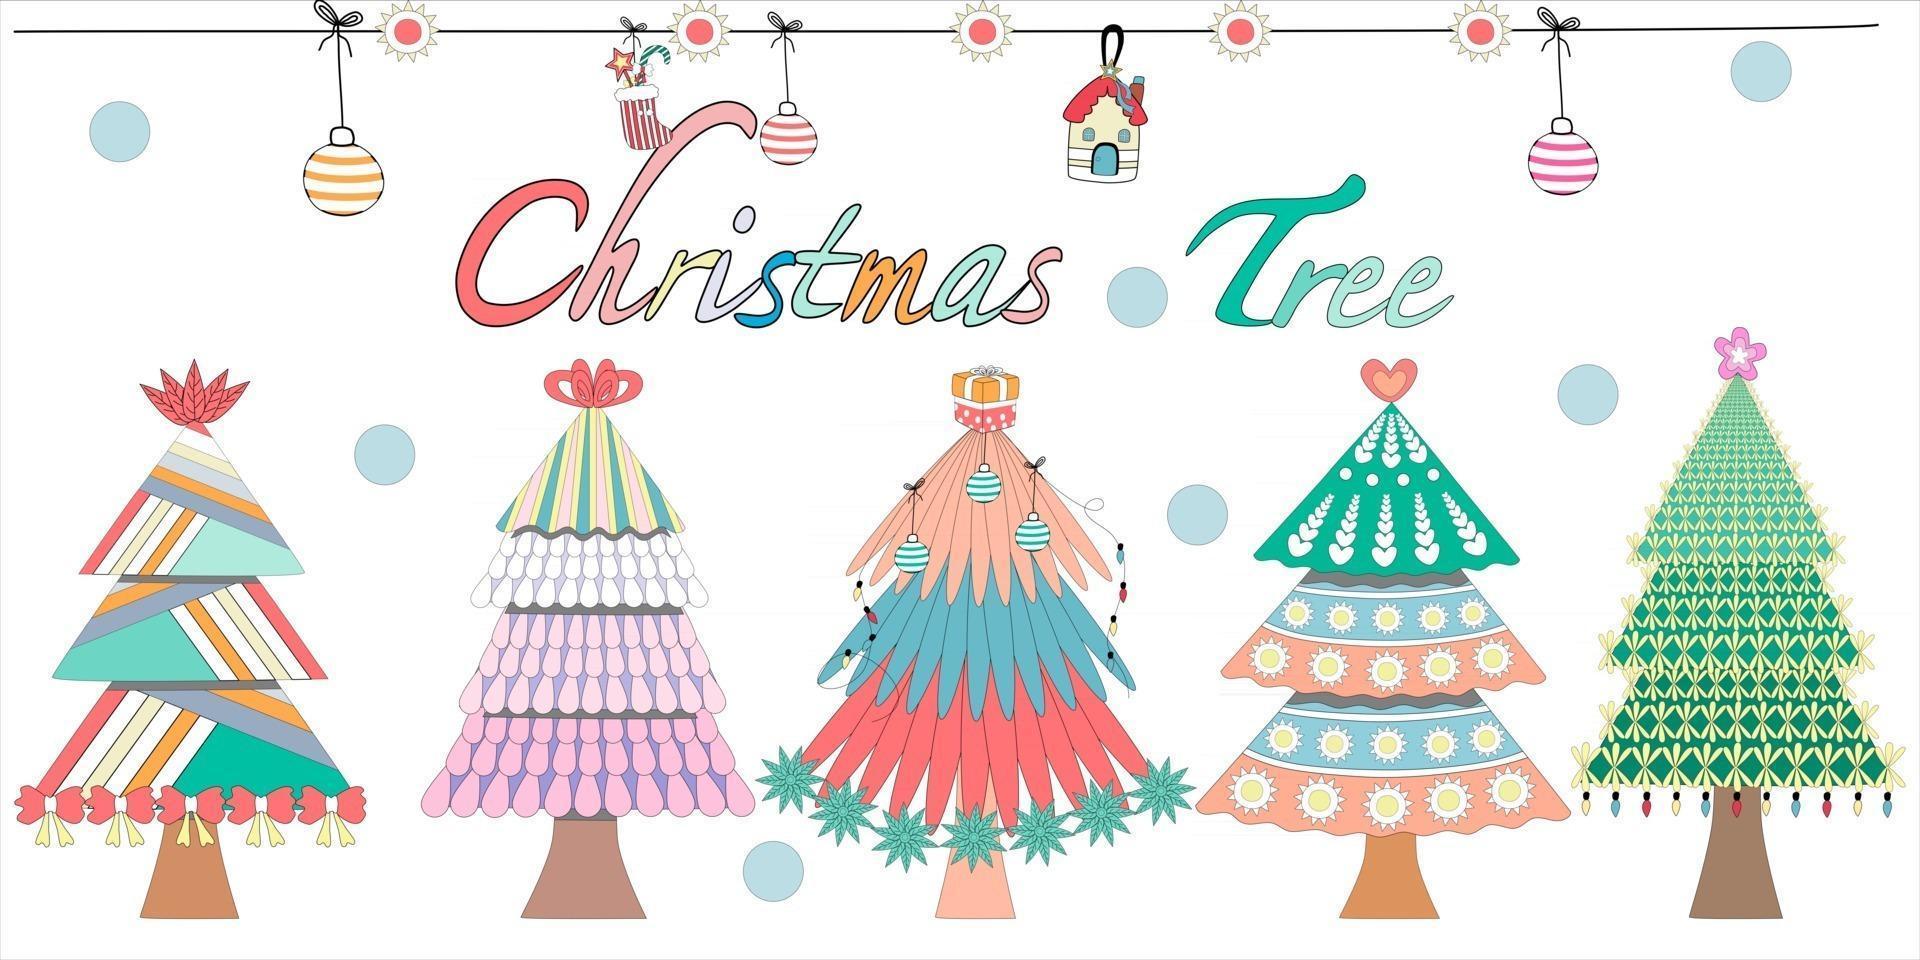 Cute Christmas tree doodle design in pastel tones vector